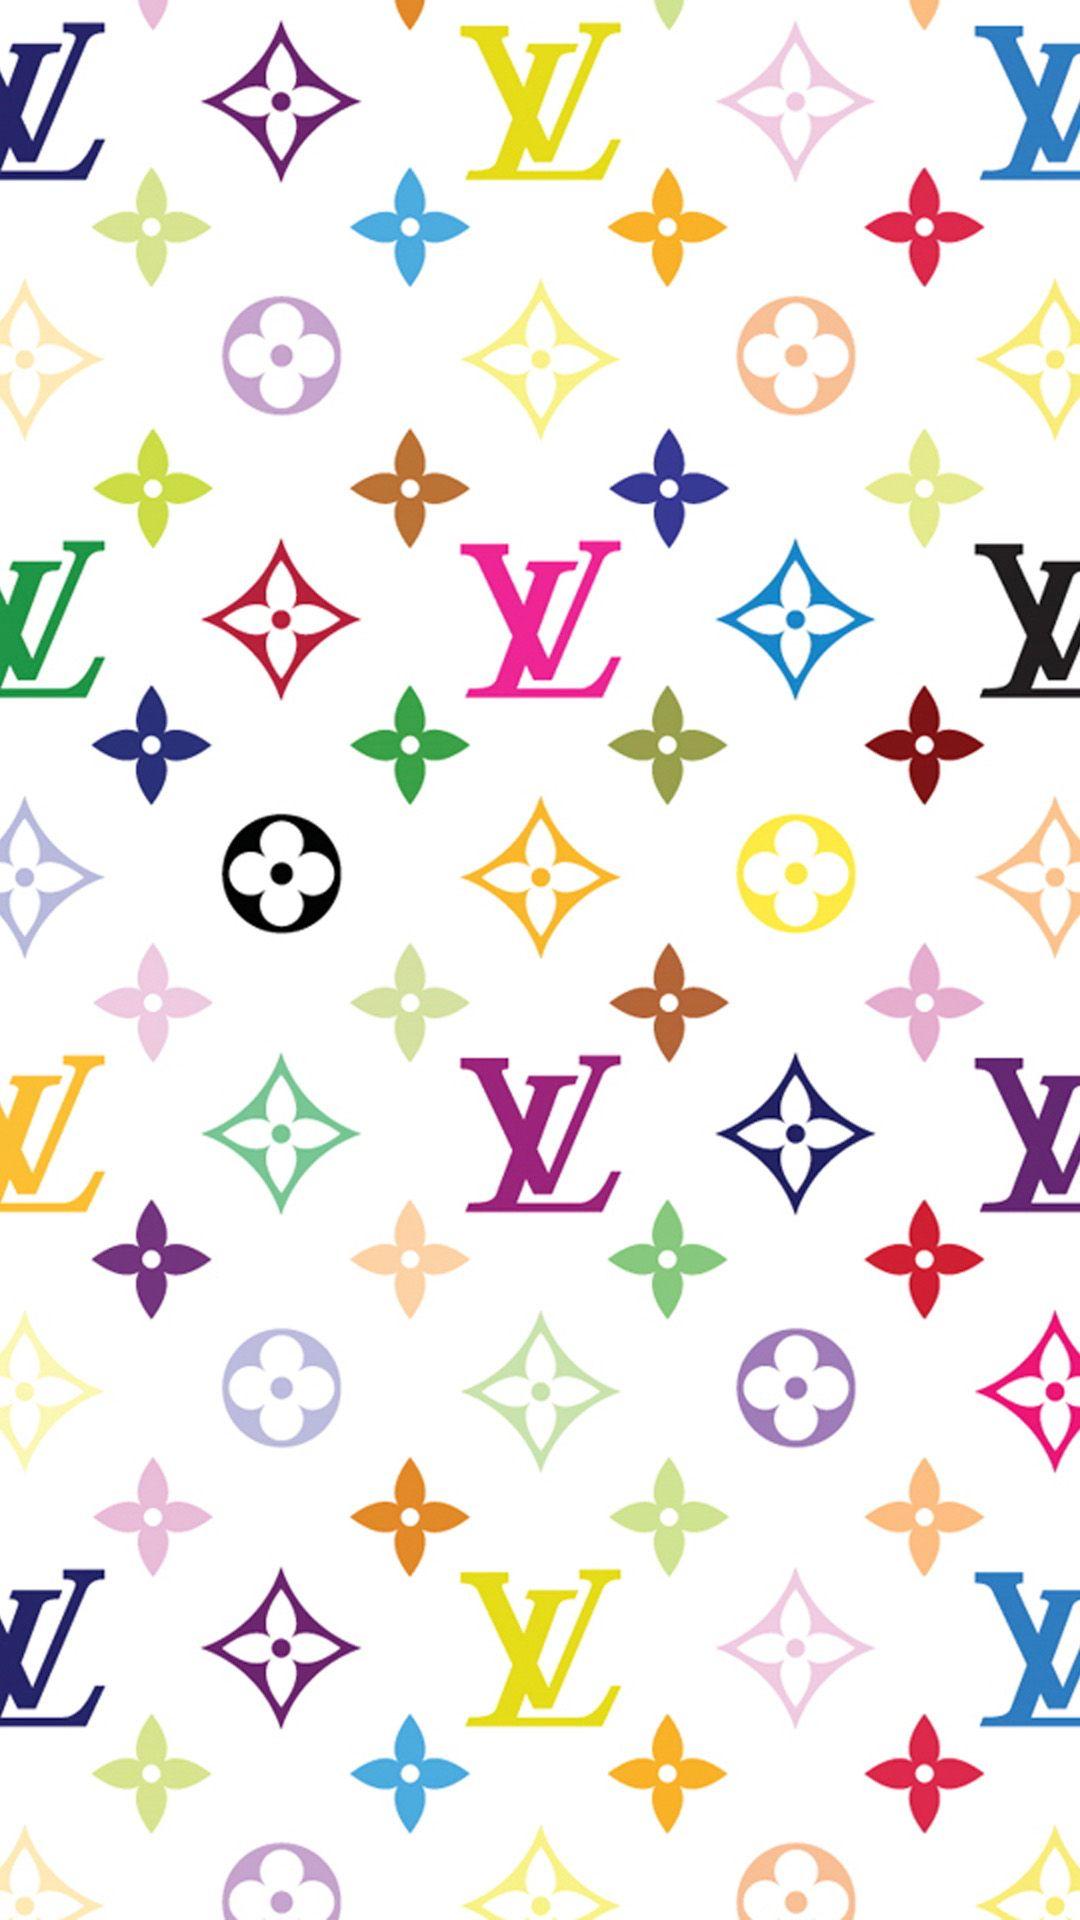 Louis Vuitton Multicolor Wallpapers - Top Free Louis Vuitton